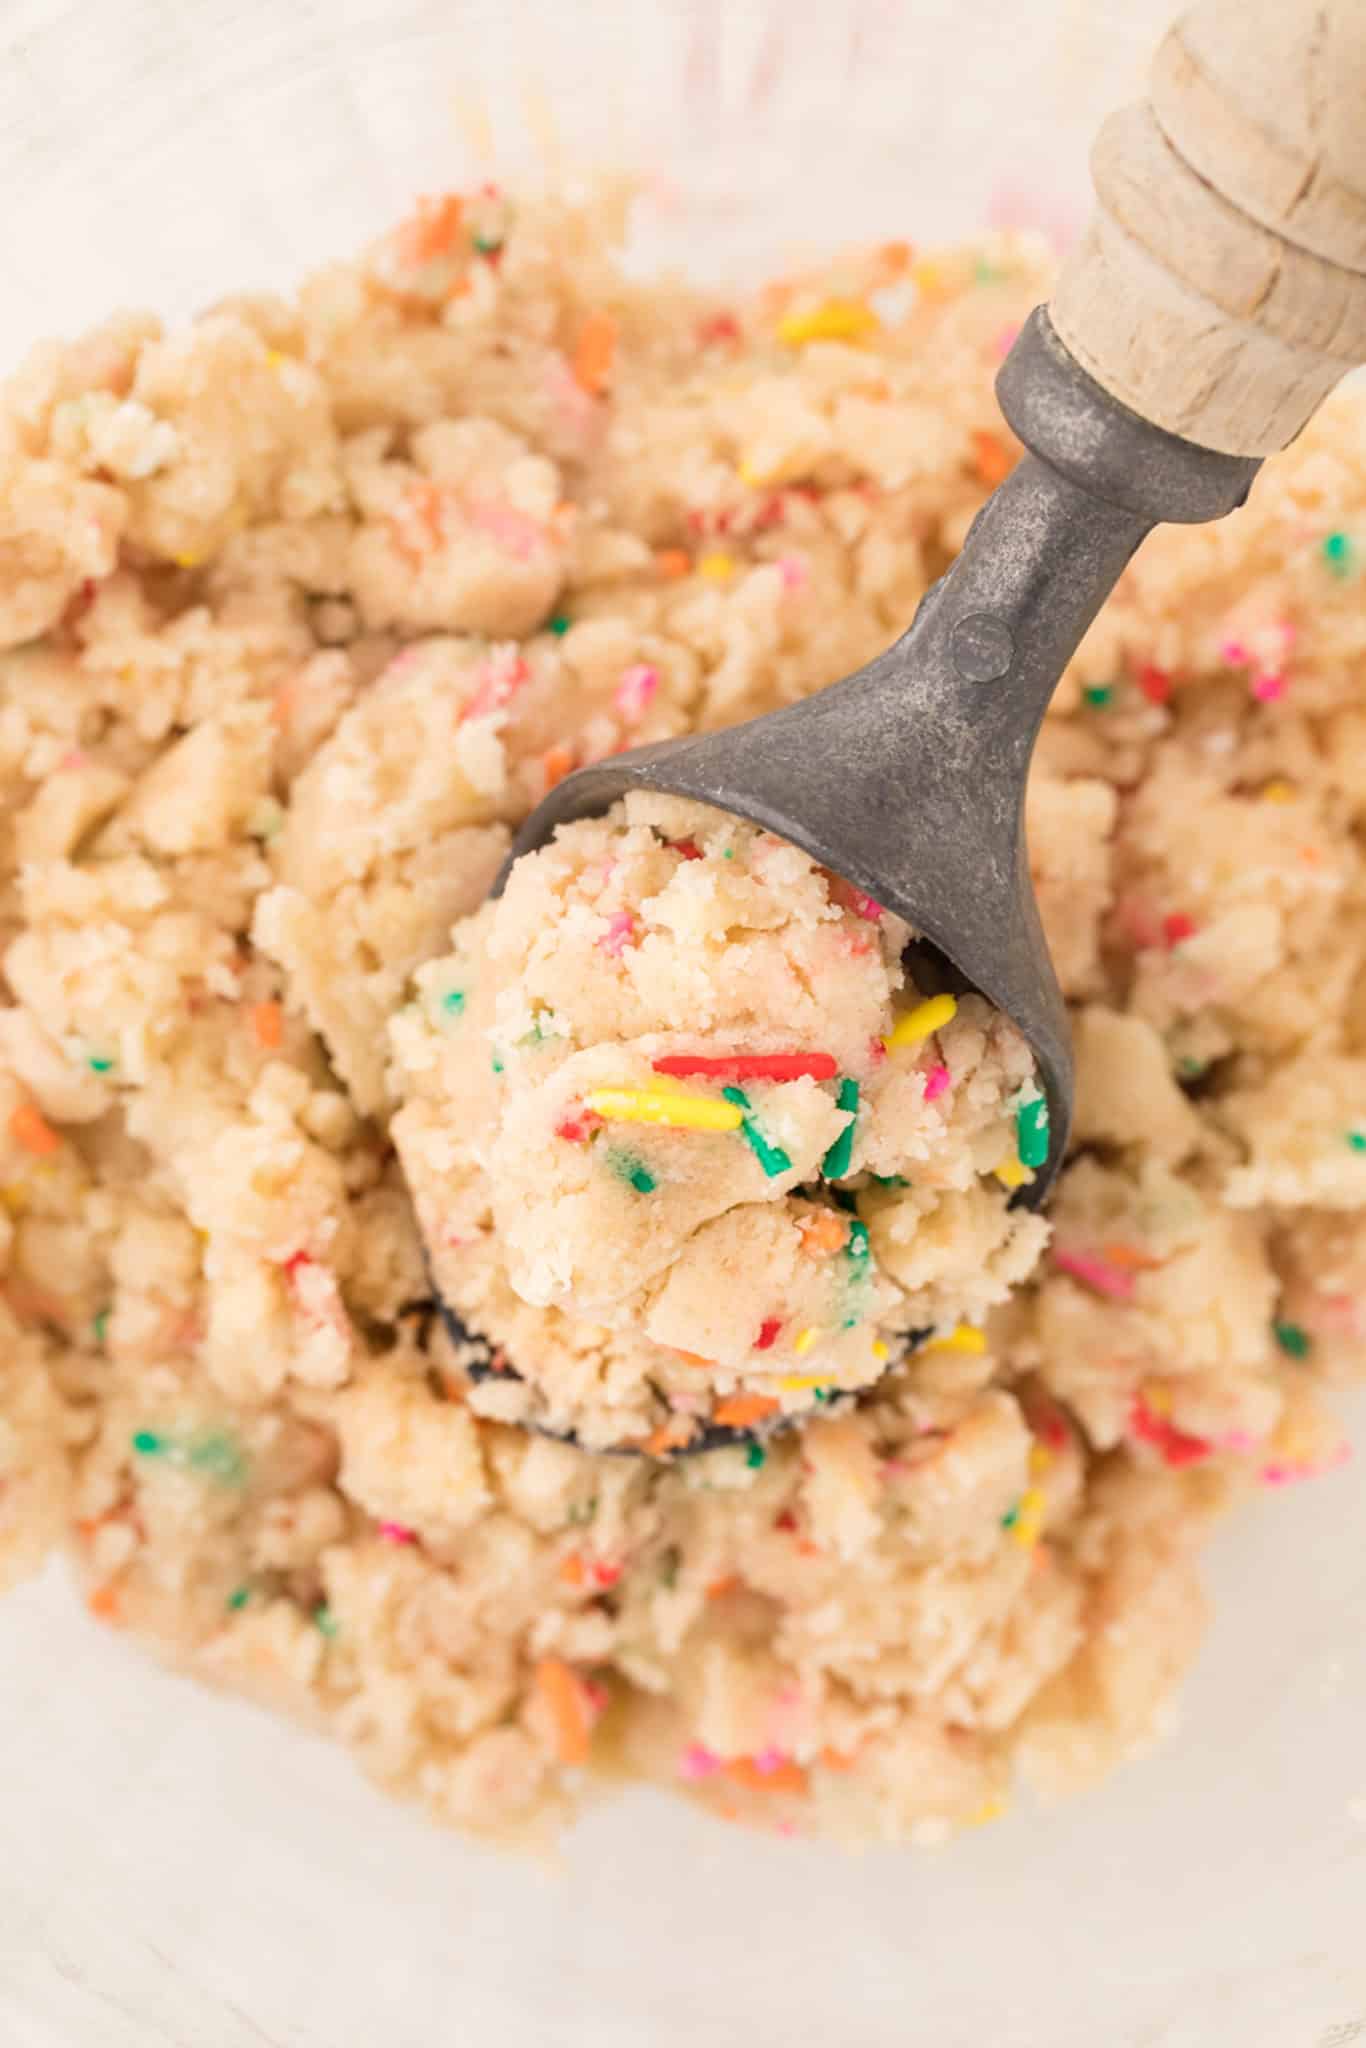 a scoop of edible sugar cookie dough with sprinkles